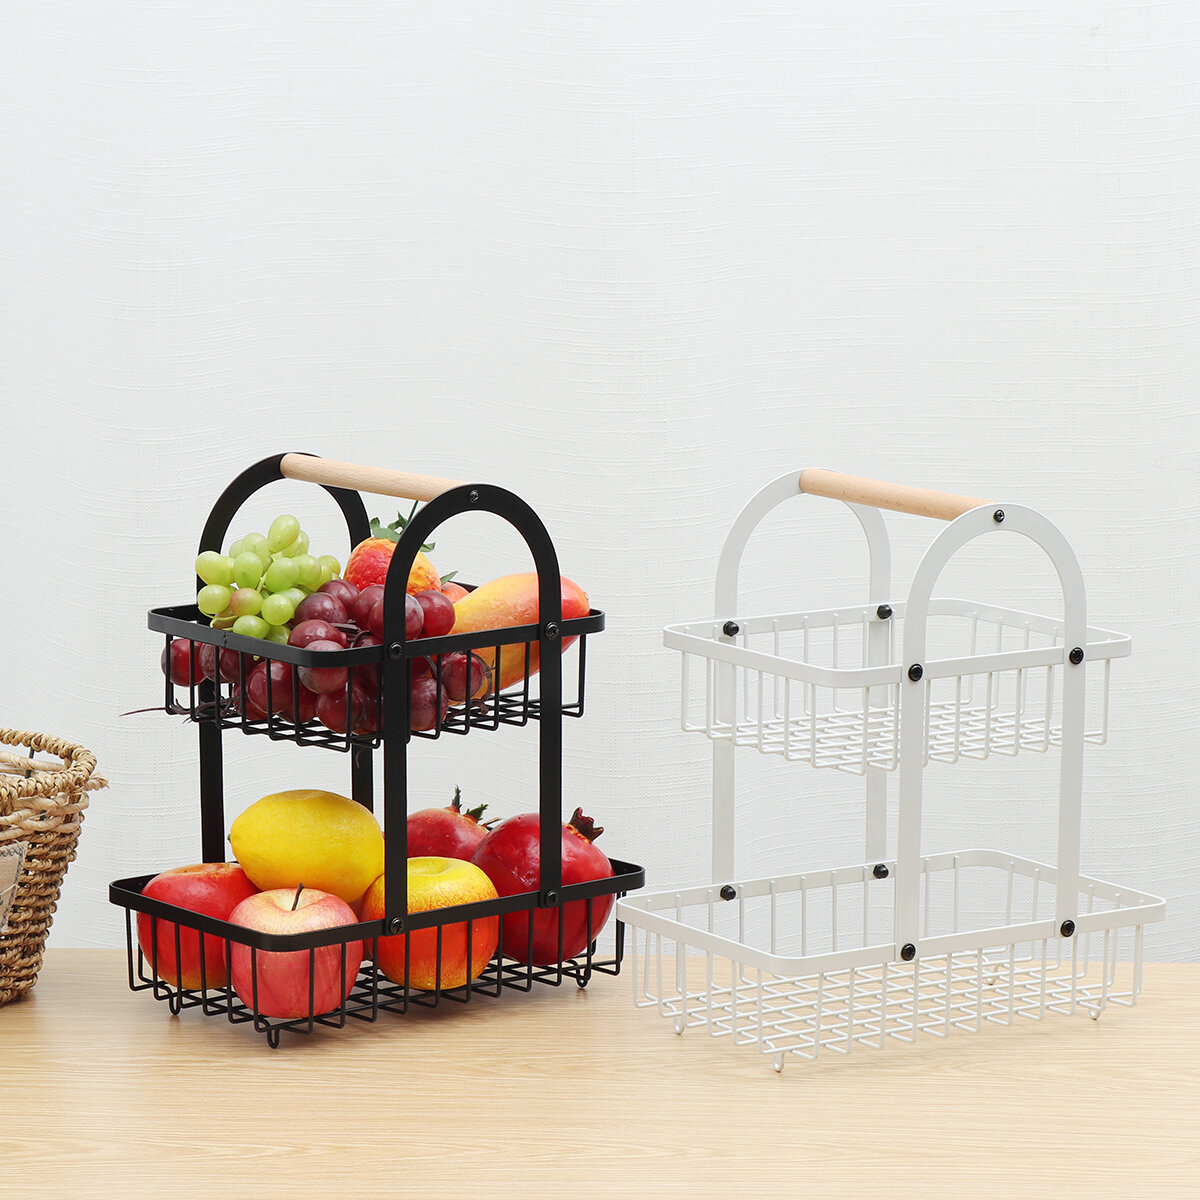 Multi-purpose 2-layer Iron Fruit Rack Portable Handheld Fruit Basket Detachable Sturdy Fruit Stand